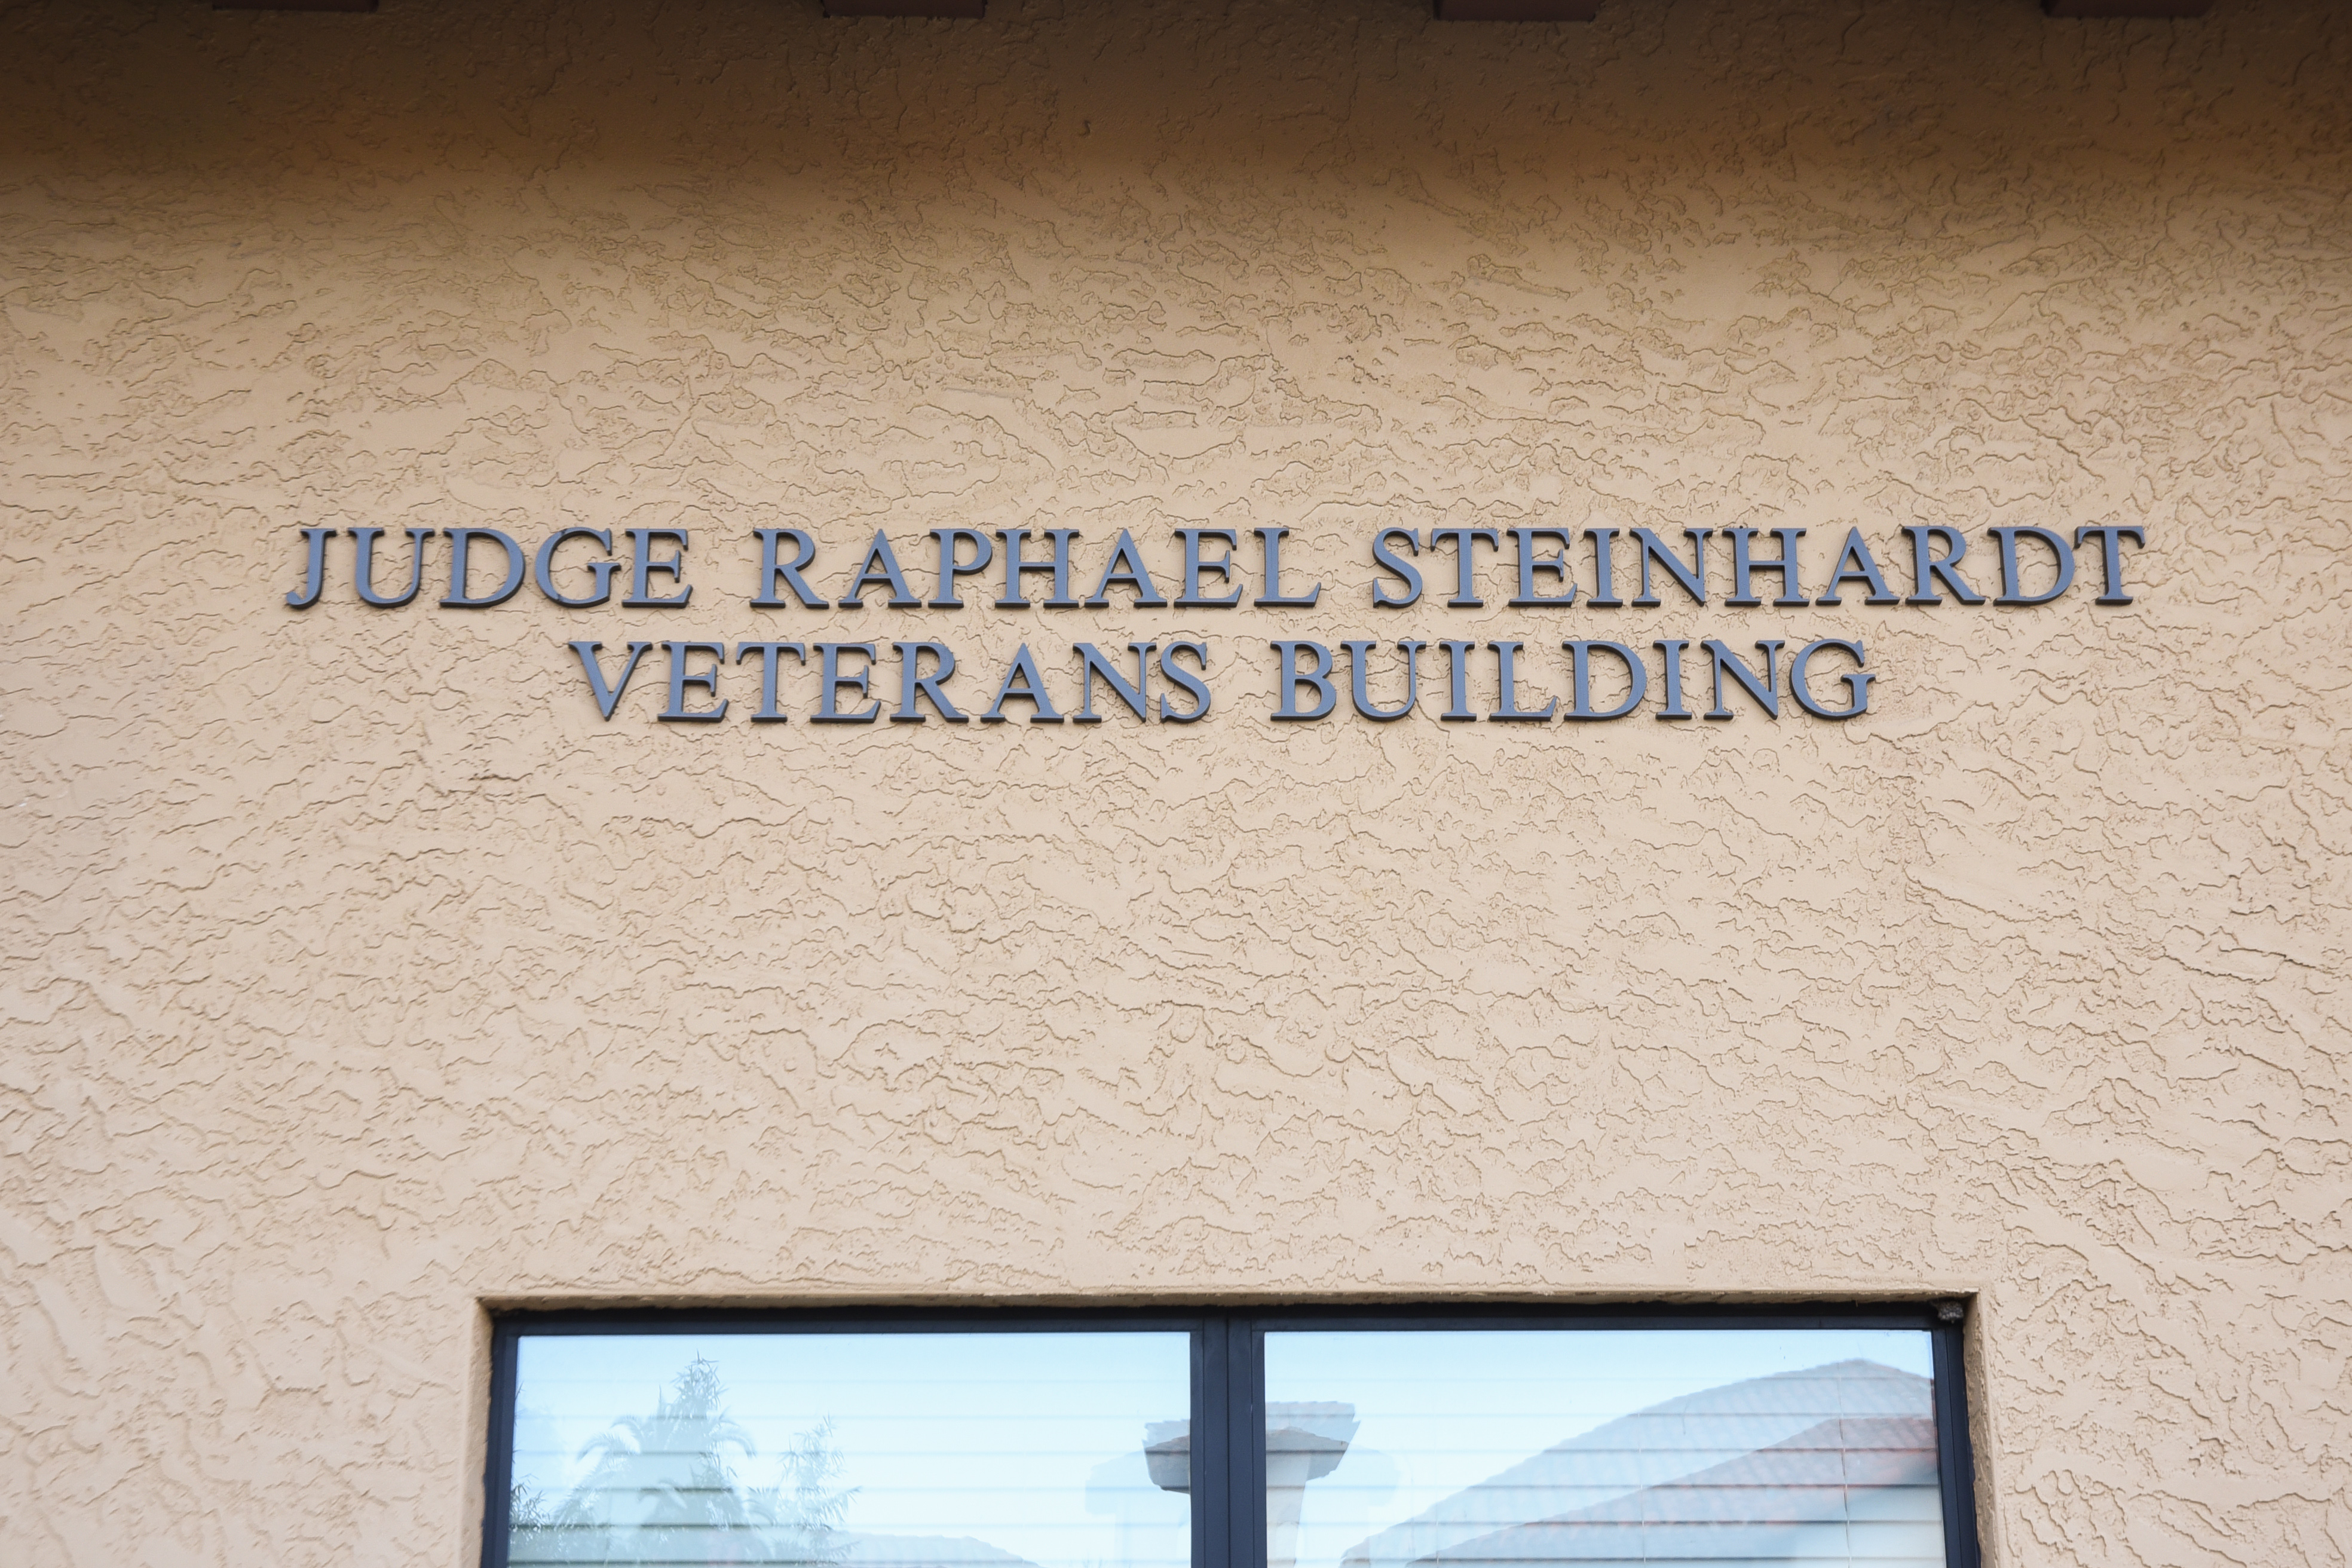 Judge Steinhardt name on building